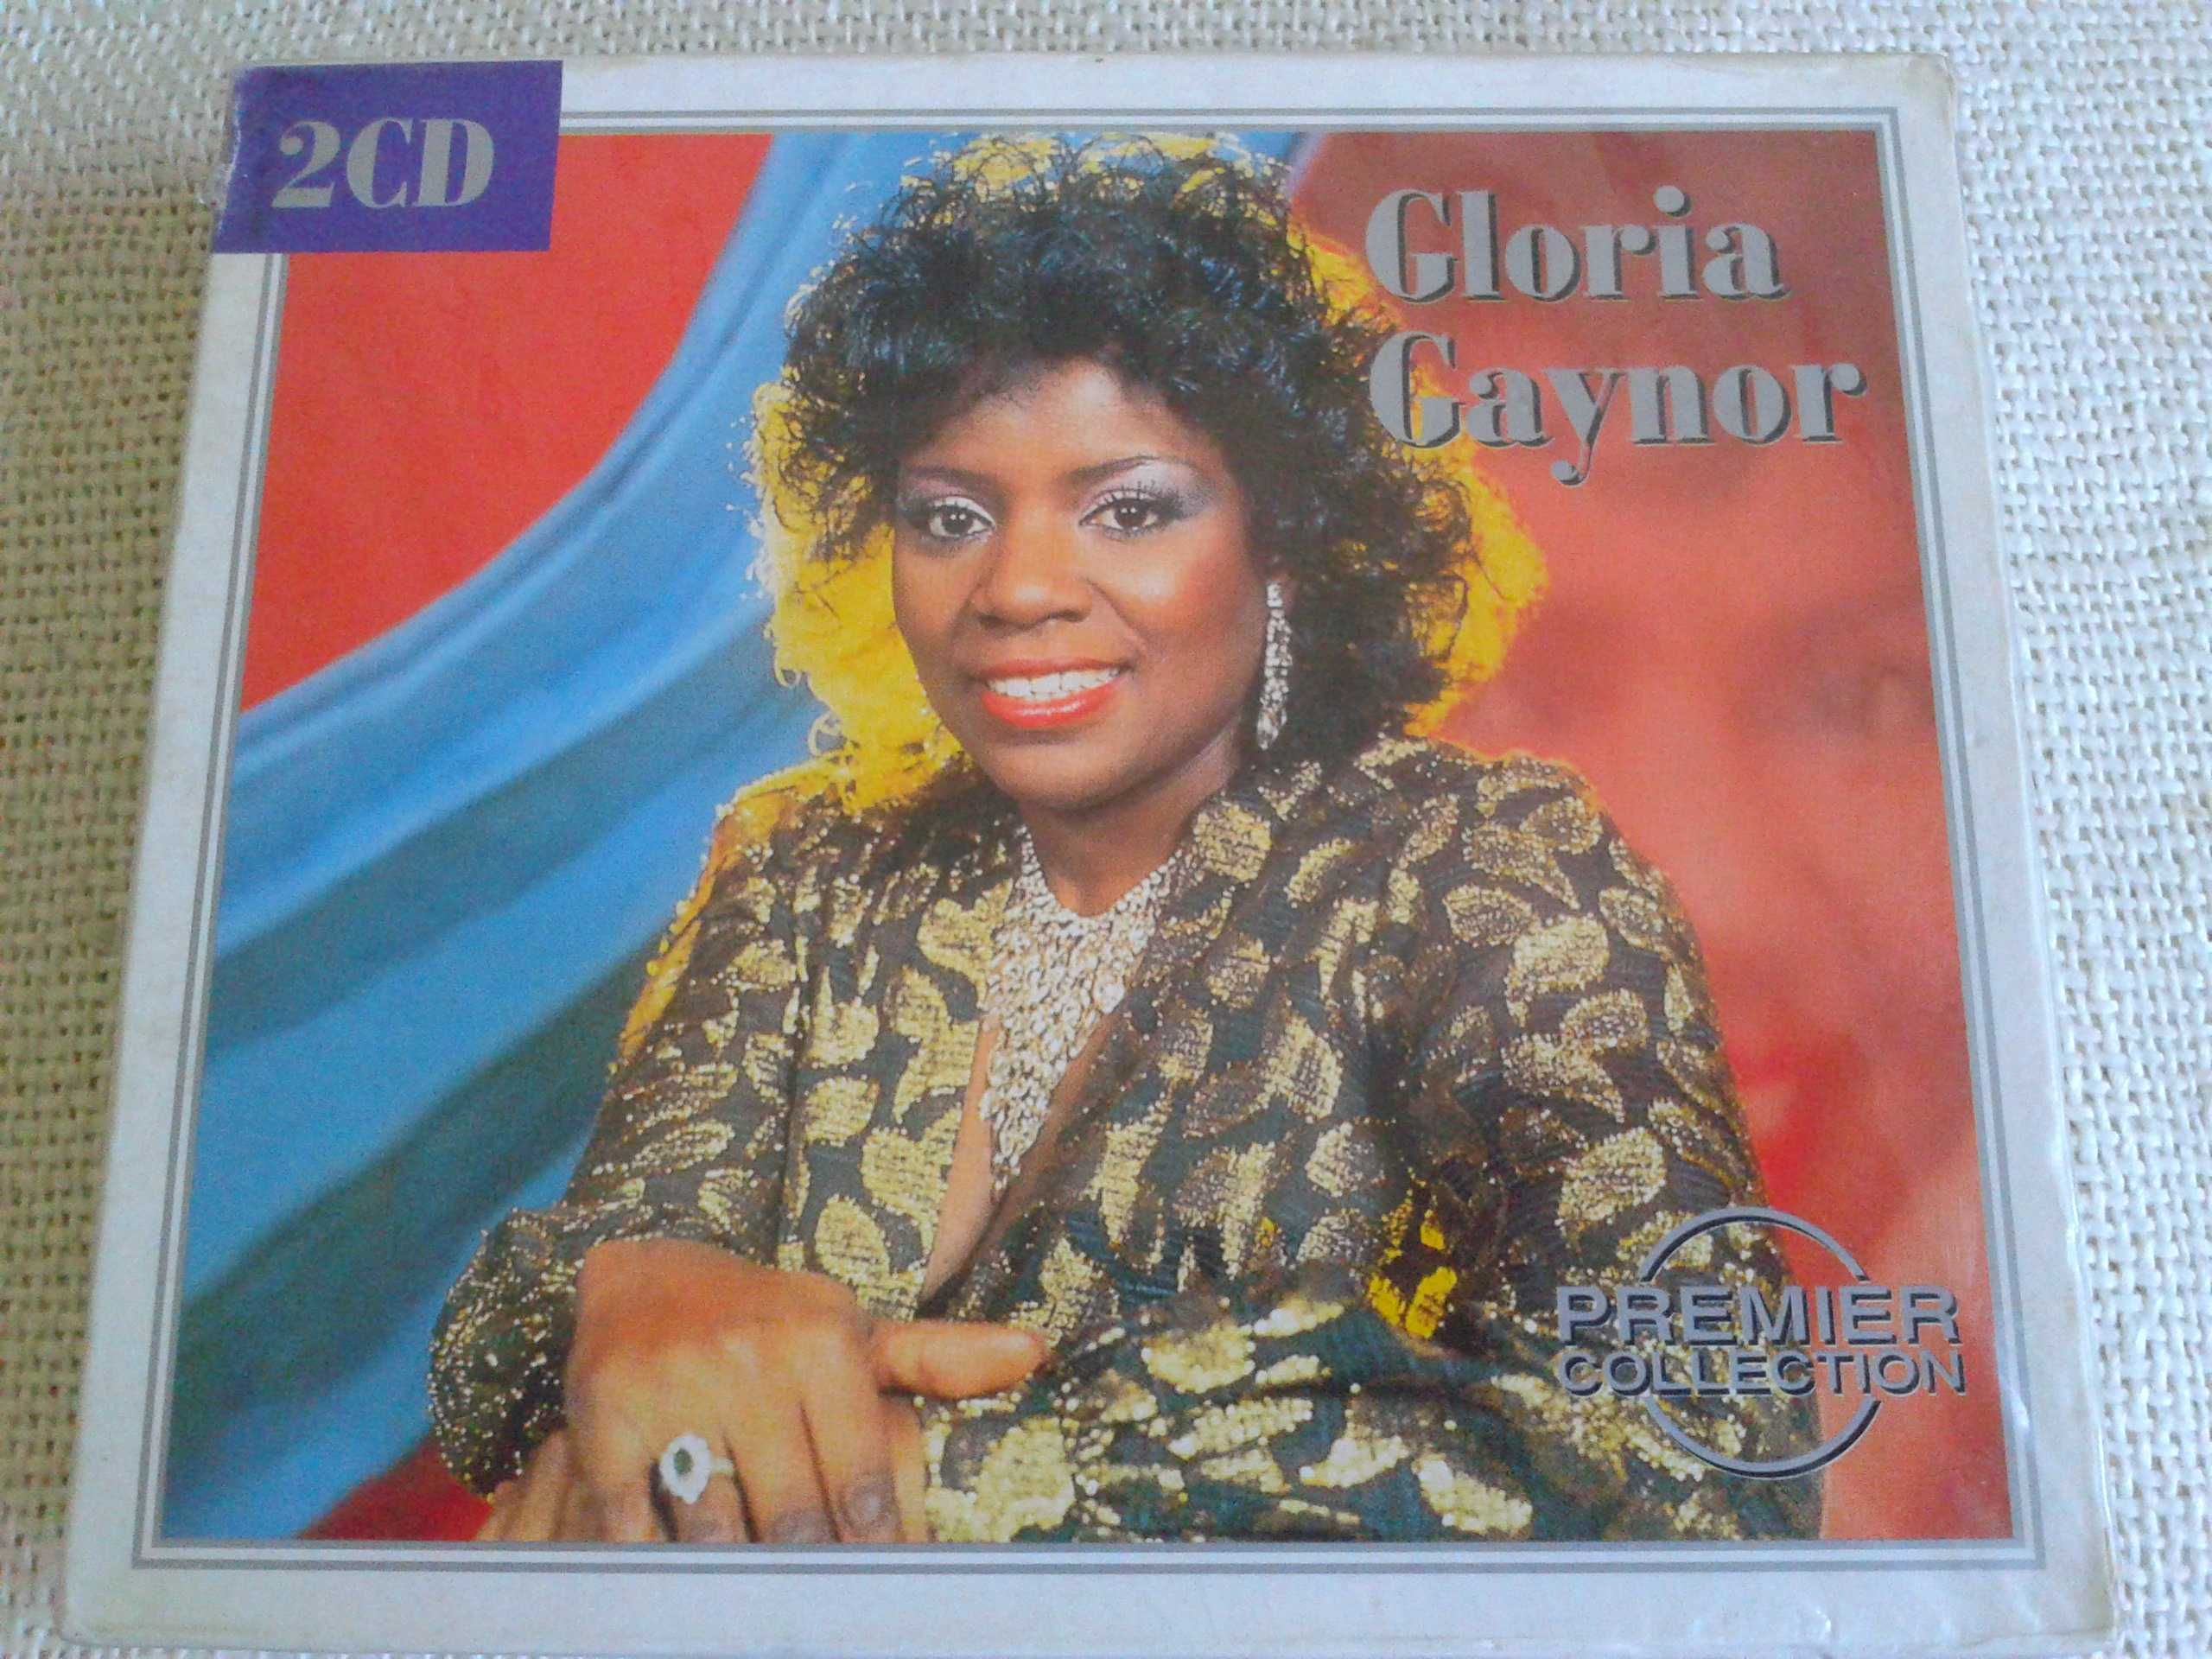 Gloria Gaynor - Premier Collection  2CD